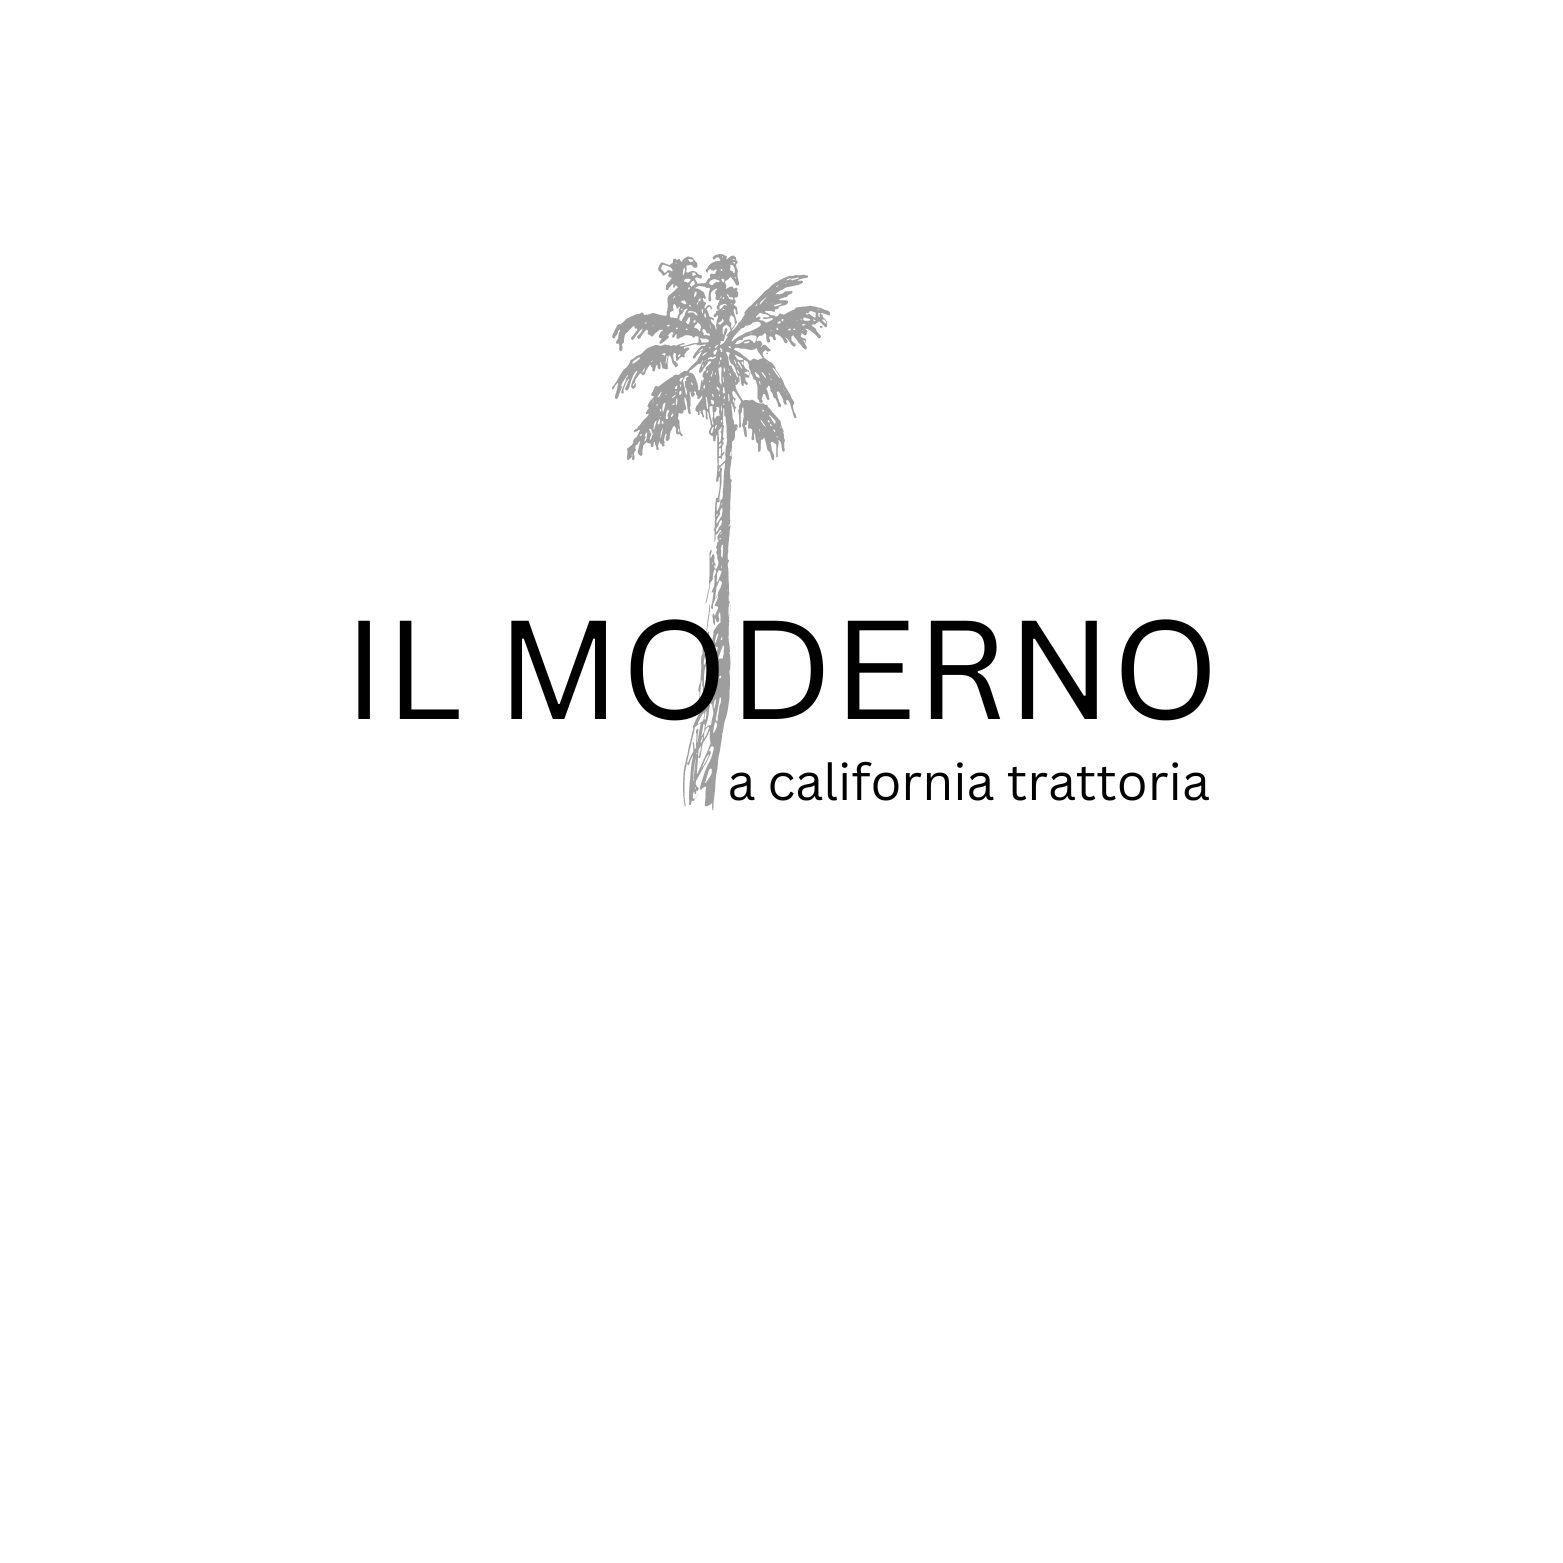 Il-Moderno-logo.jpg